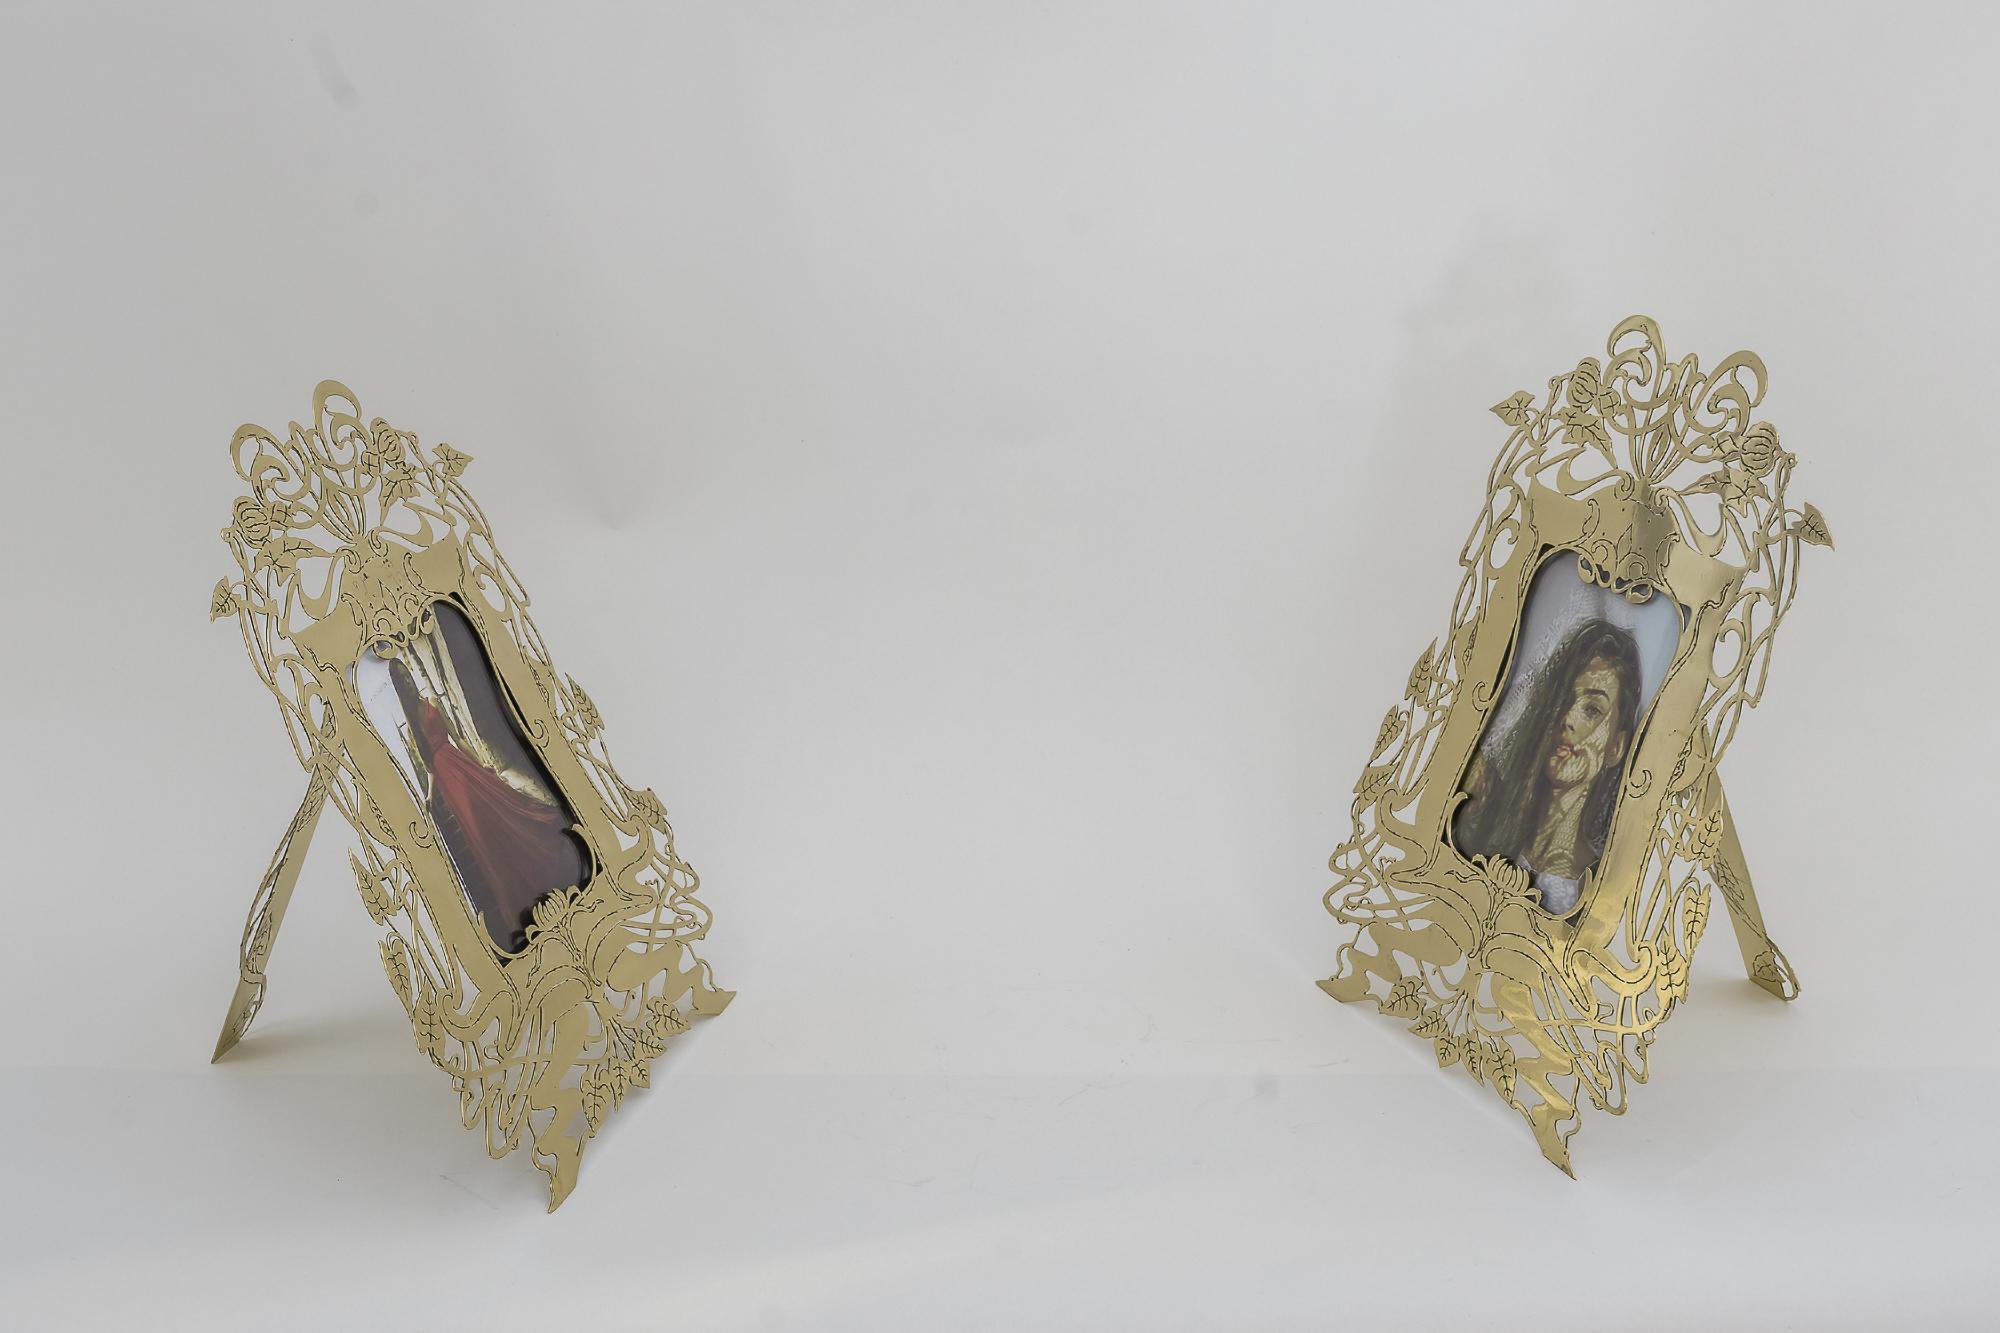 Two Jugendstil picture frames, Vienna, circa 1908
Polished and stove enameled.